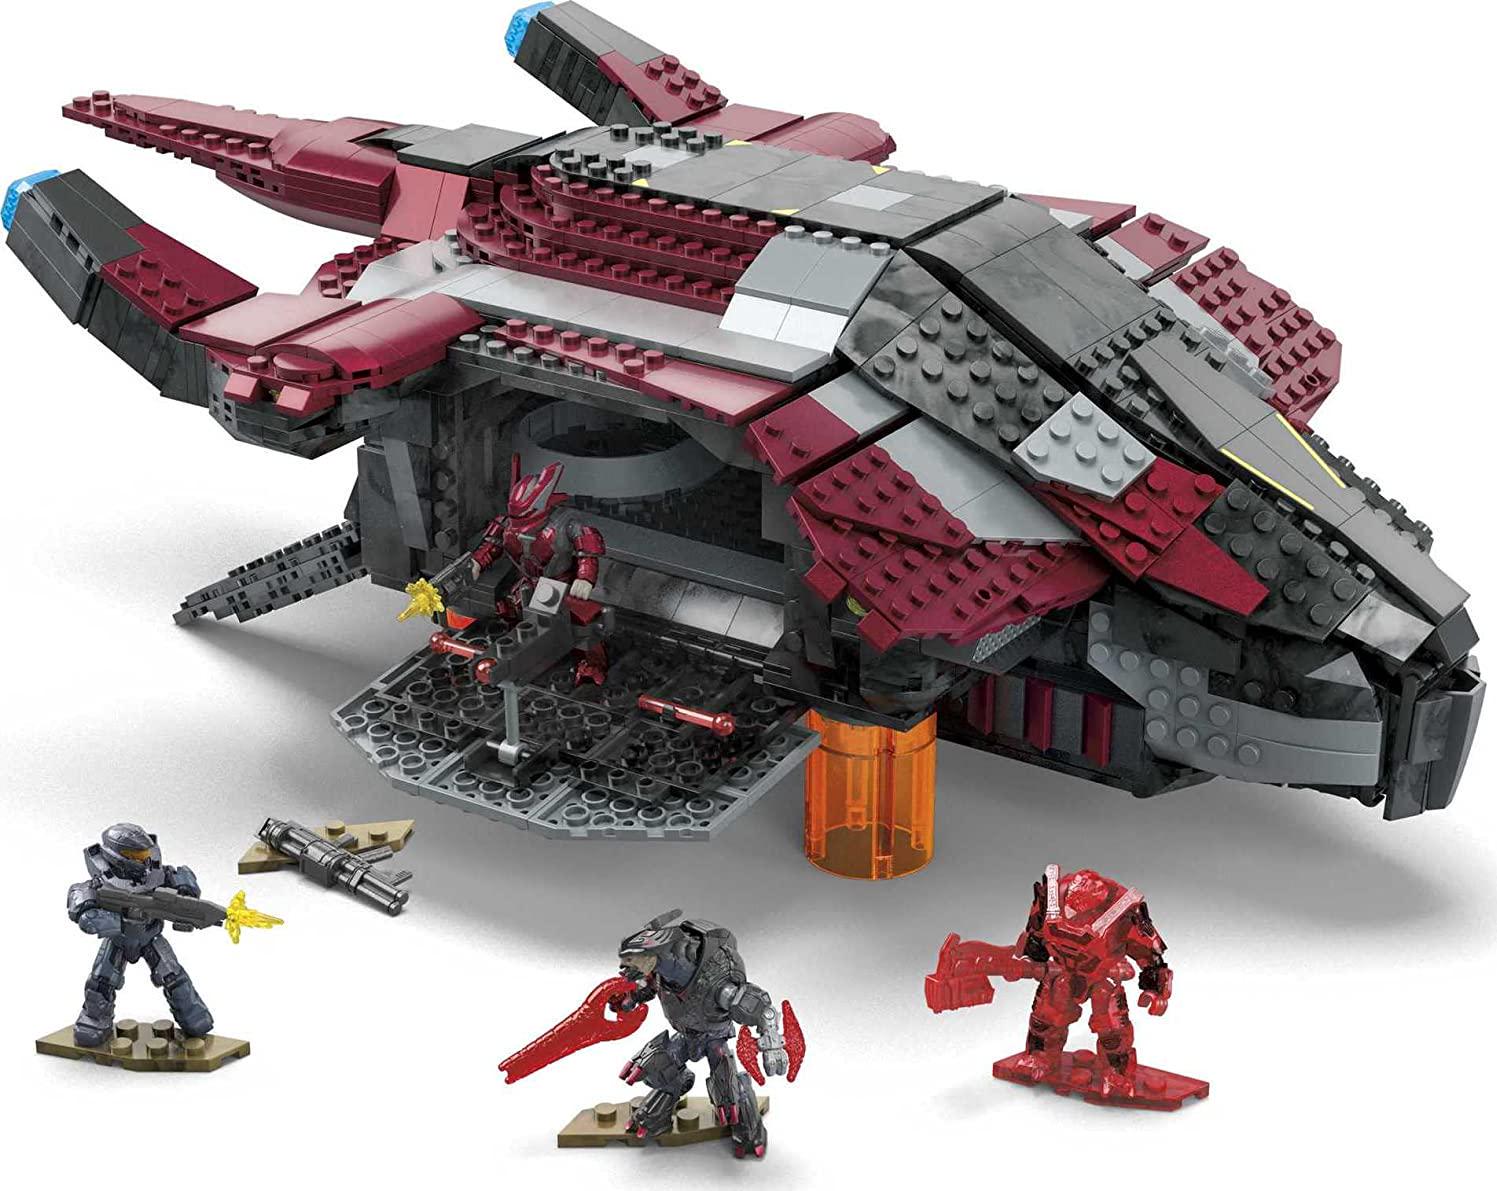 Mega Brands, Mega Halo Banished Phantom Aircraft Halo Infinite Construction Set, Building Toys for Boys, Ages 8+